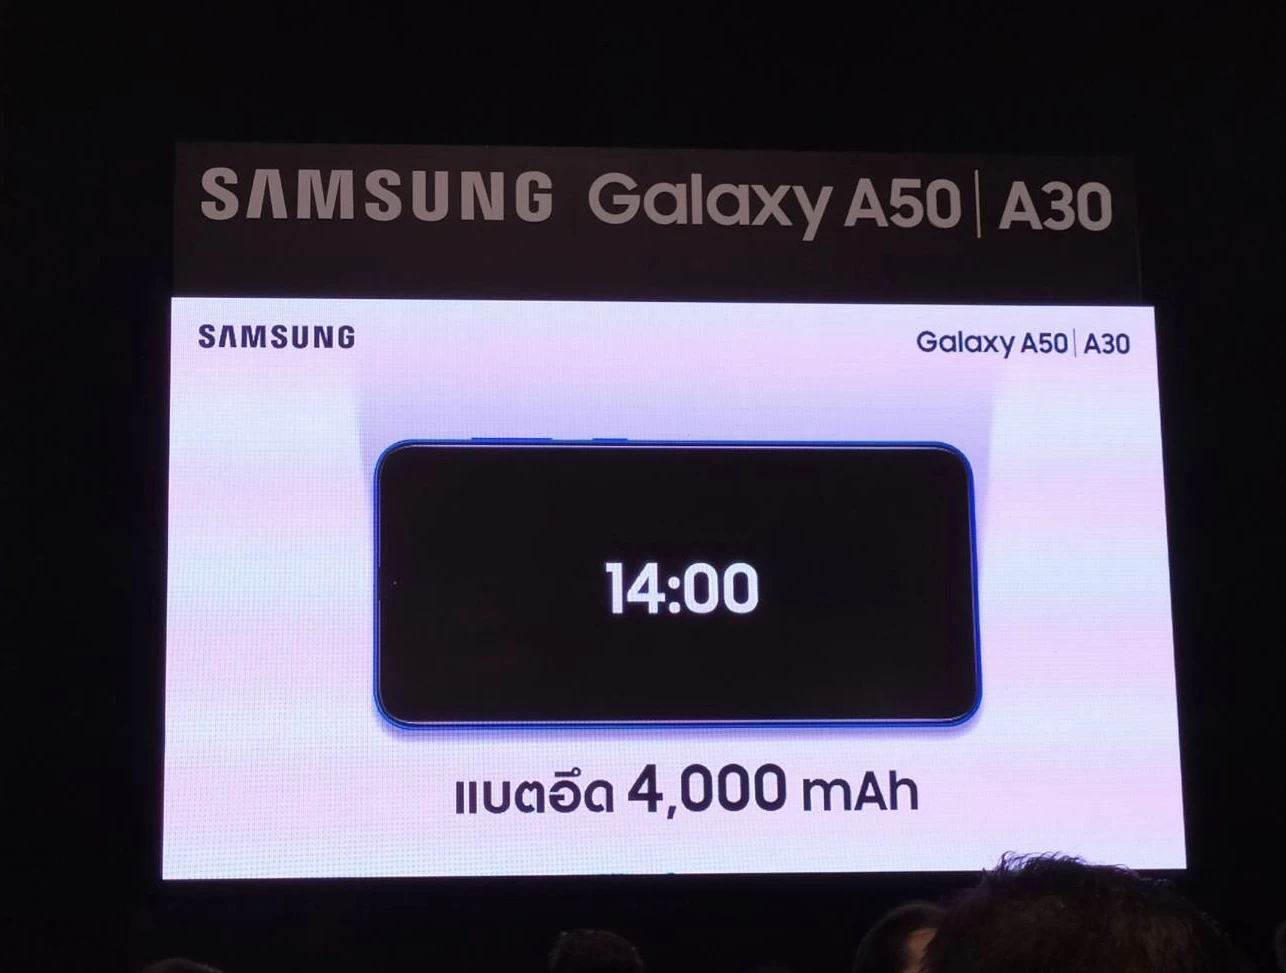 045940D3 4E91 4D16 AC3D 5DF336DA0CE0 | a30 | Samsung เปิดตัวชุดใหญ่สะใจคนไทย! สองสมาร์ทโฟนรุ่นกลาง A50 และ A30 พร้อมแท็บเล็ตสองตัวใหม่มาพร้อมปากกา และอุปกรณ์เสริมสี่ตัวรวดทั้งนาฬิกาและหูฟัง